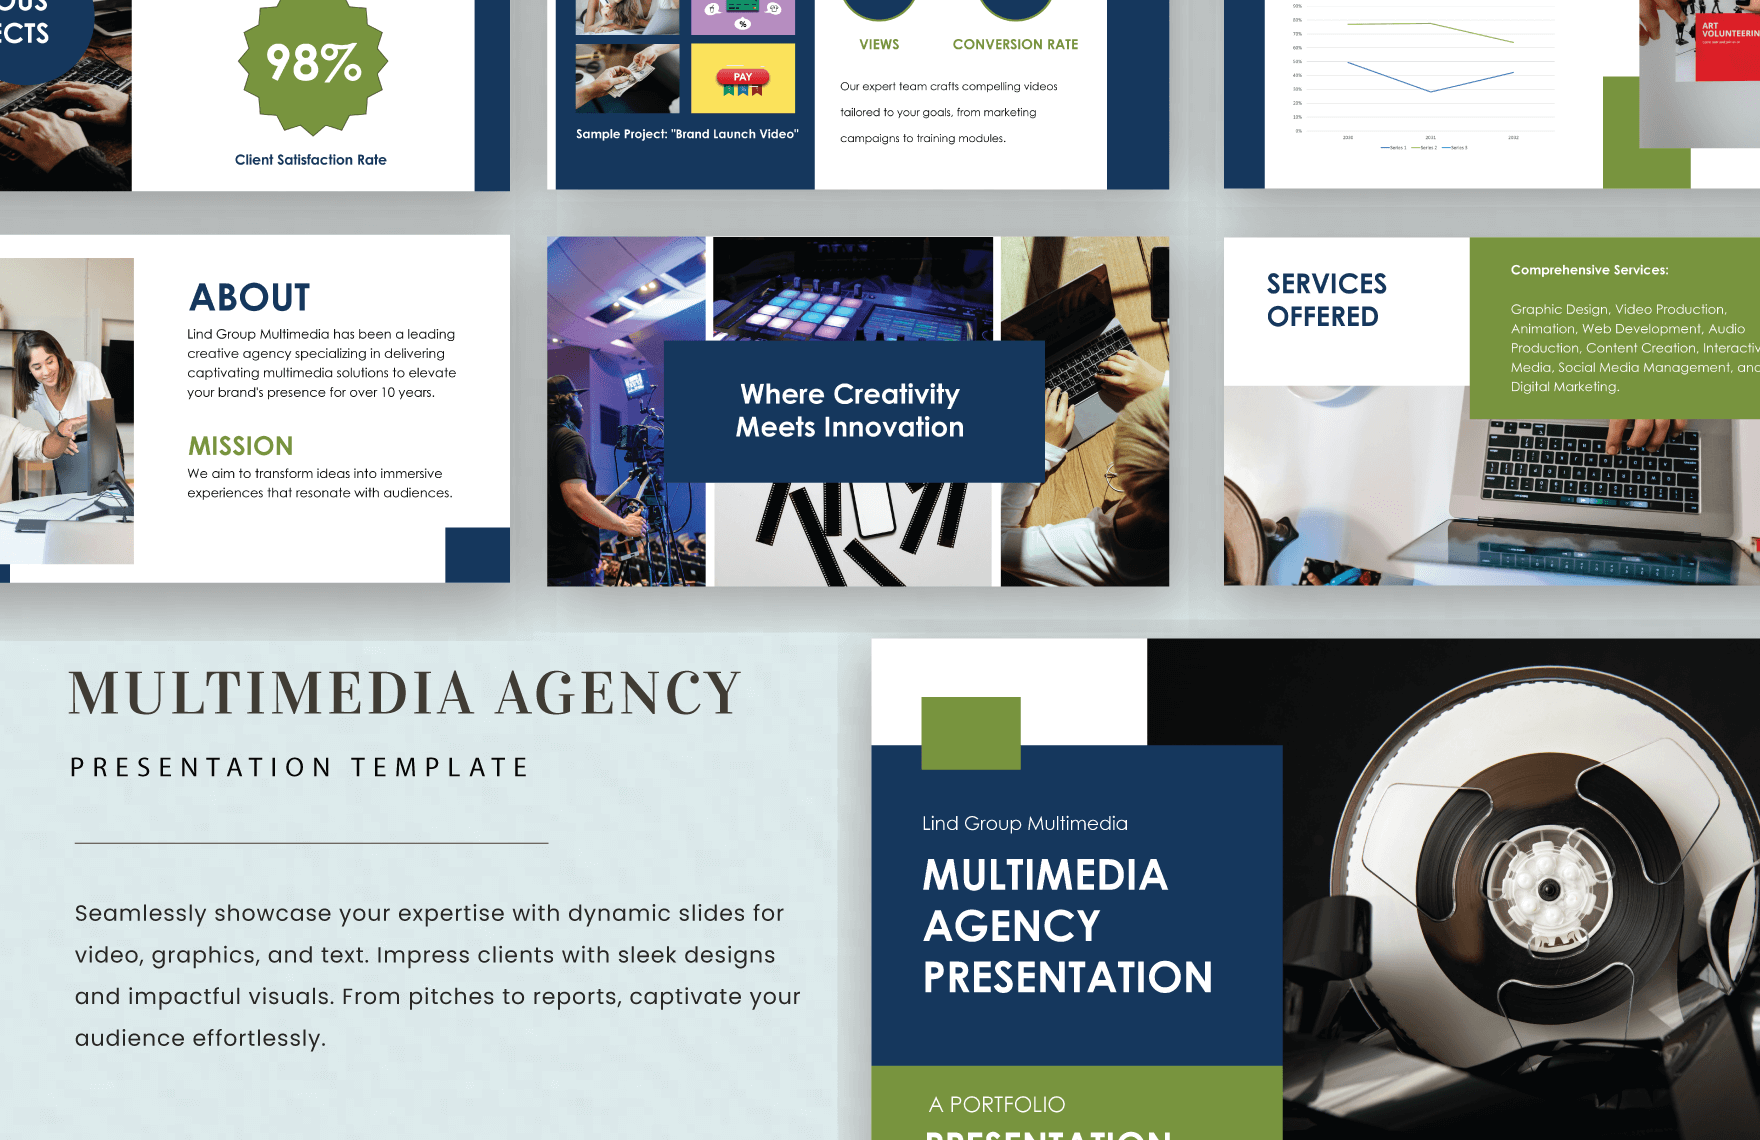 Multimedia Agency Presentation Template